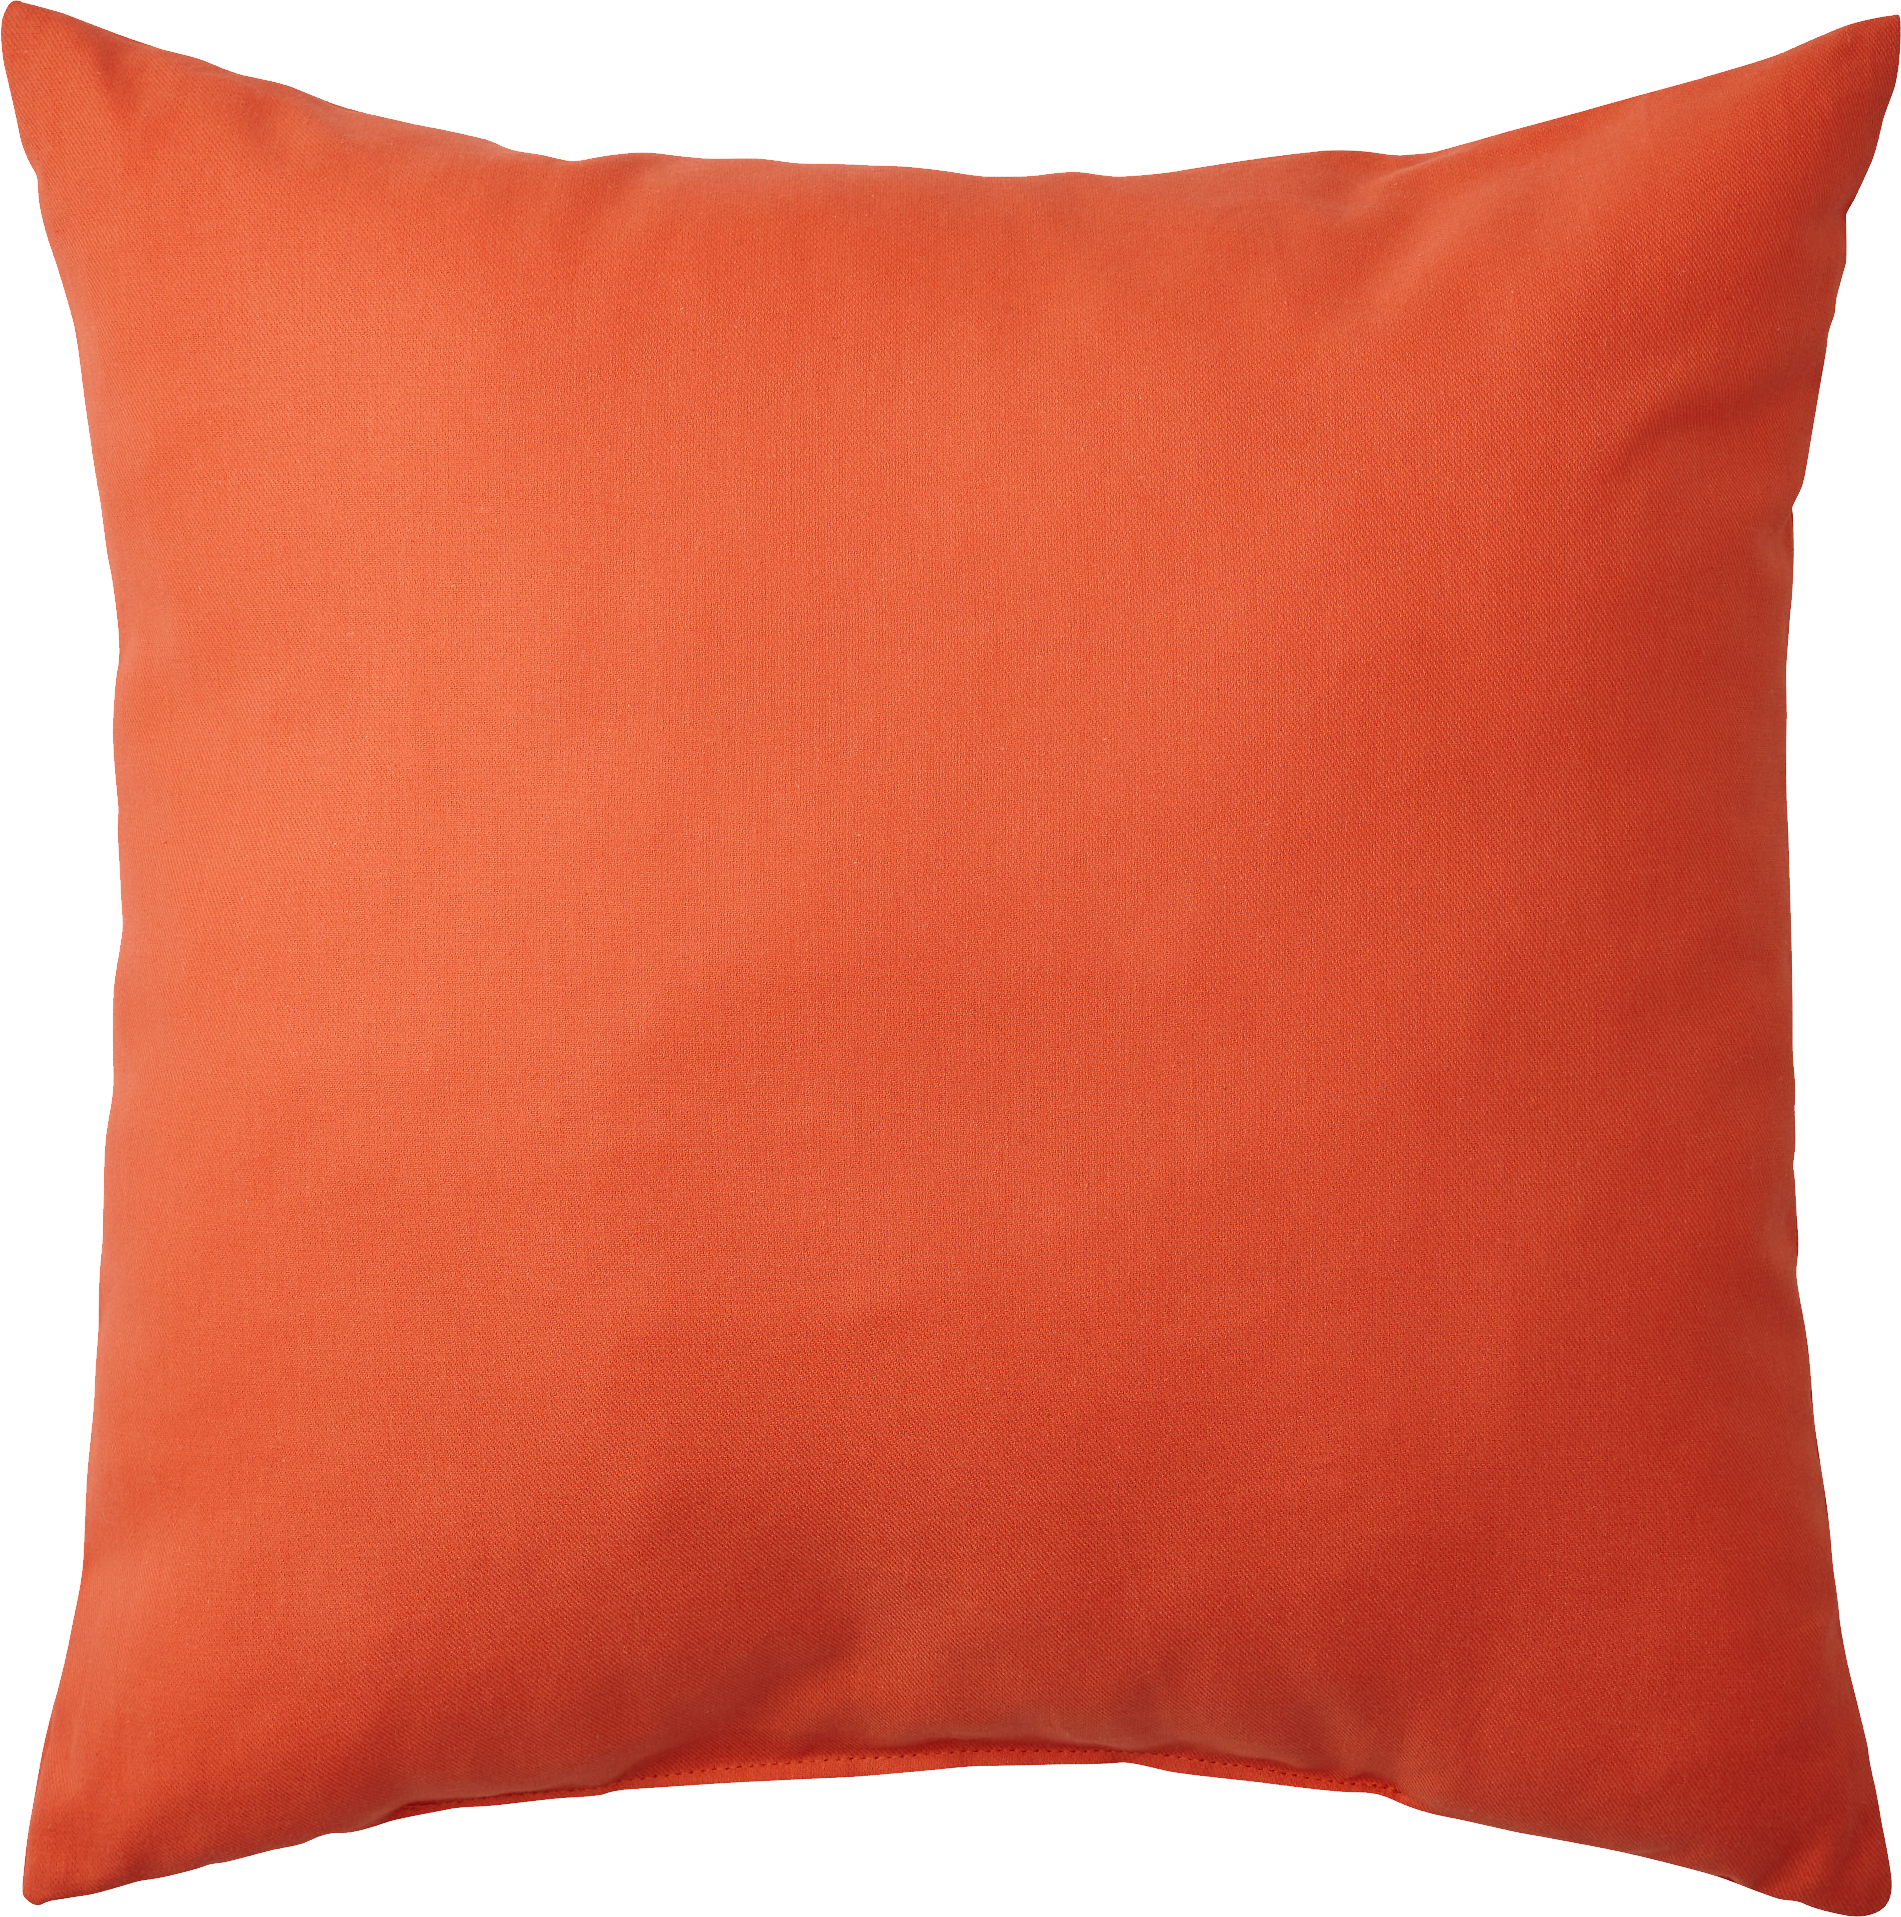 Pillow clipart orange. Png image purepng free